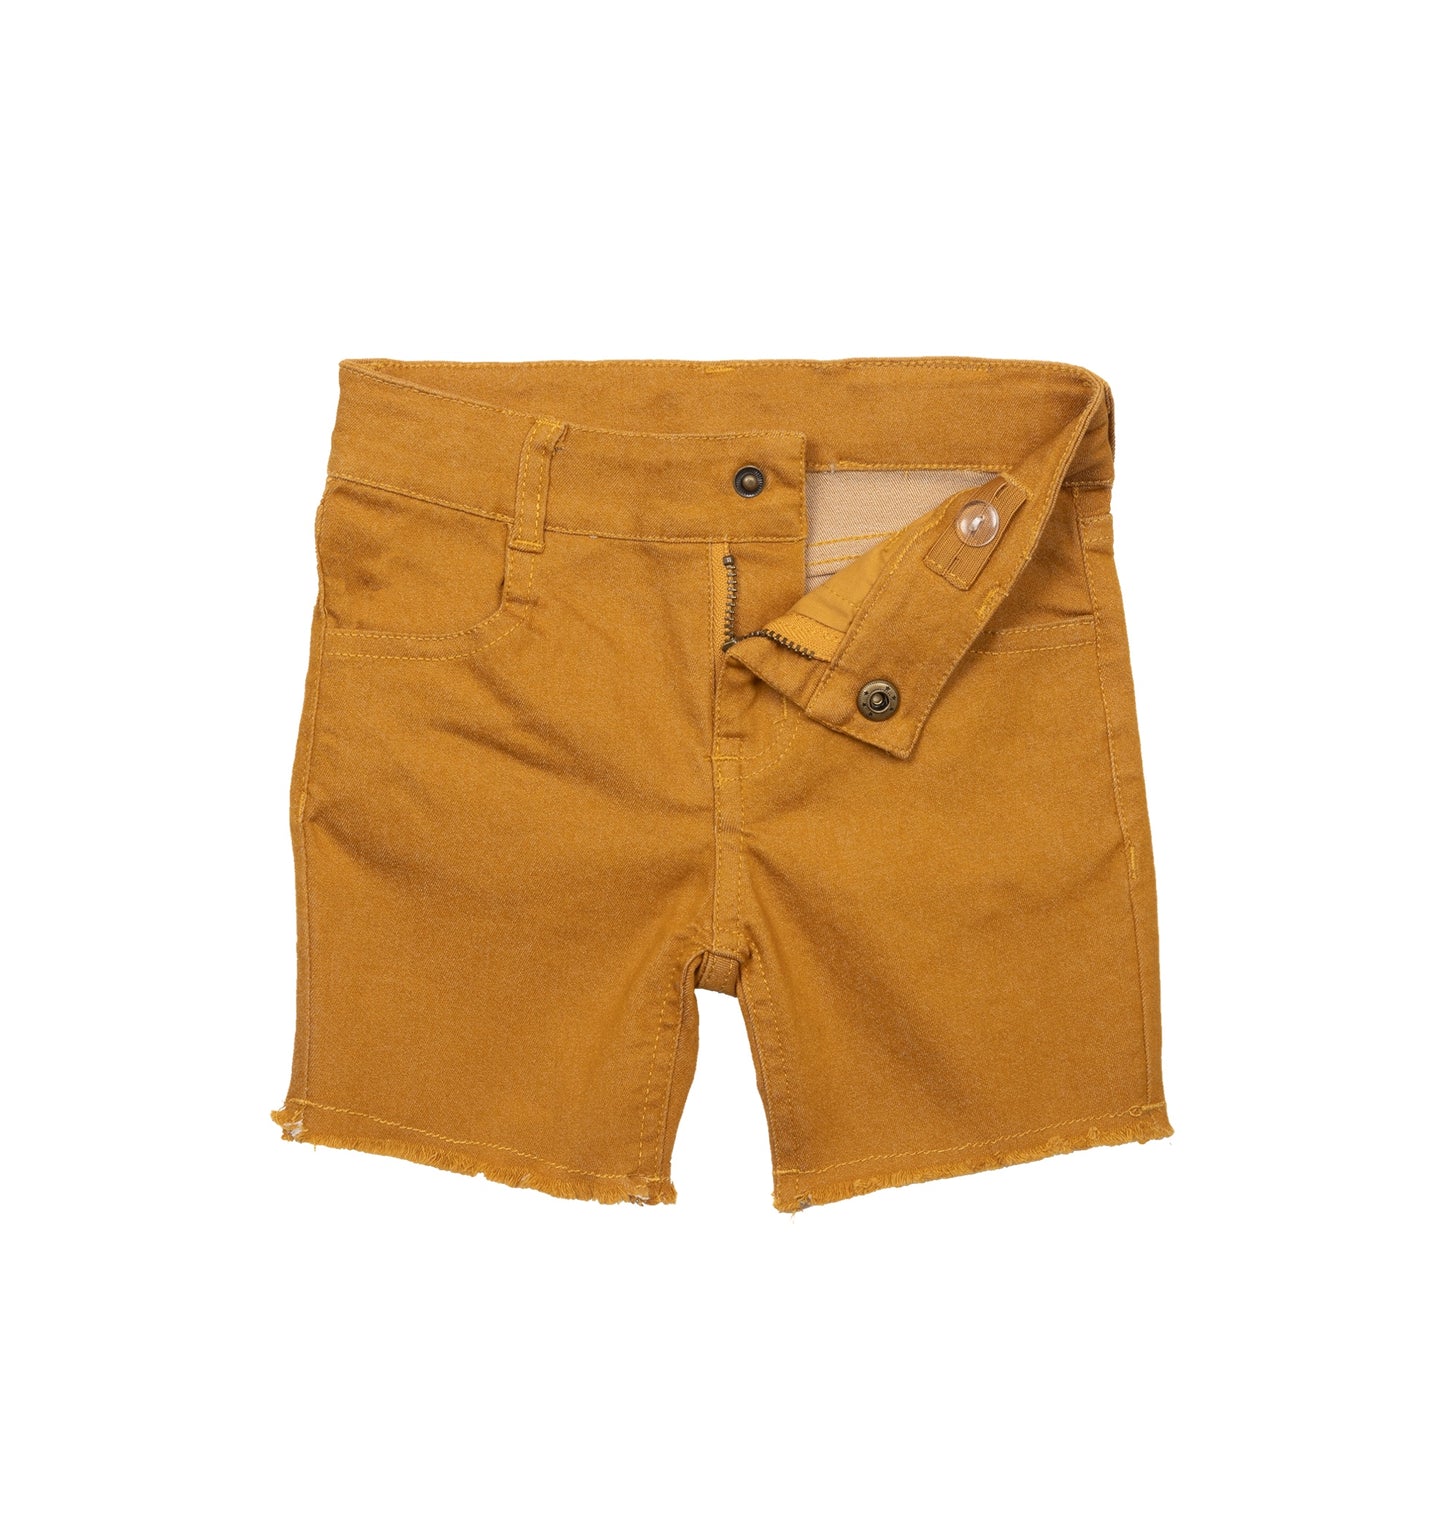 Waco Shorts- Apricot